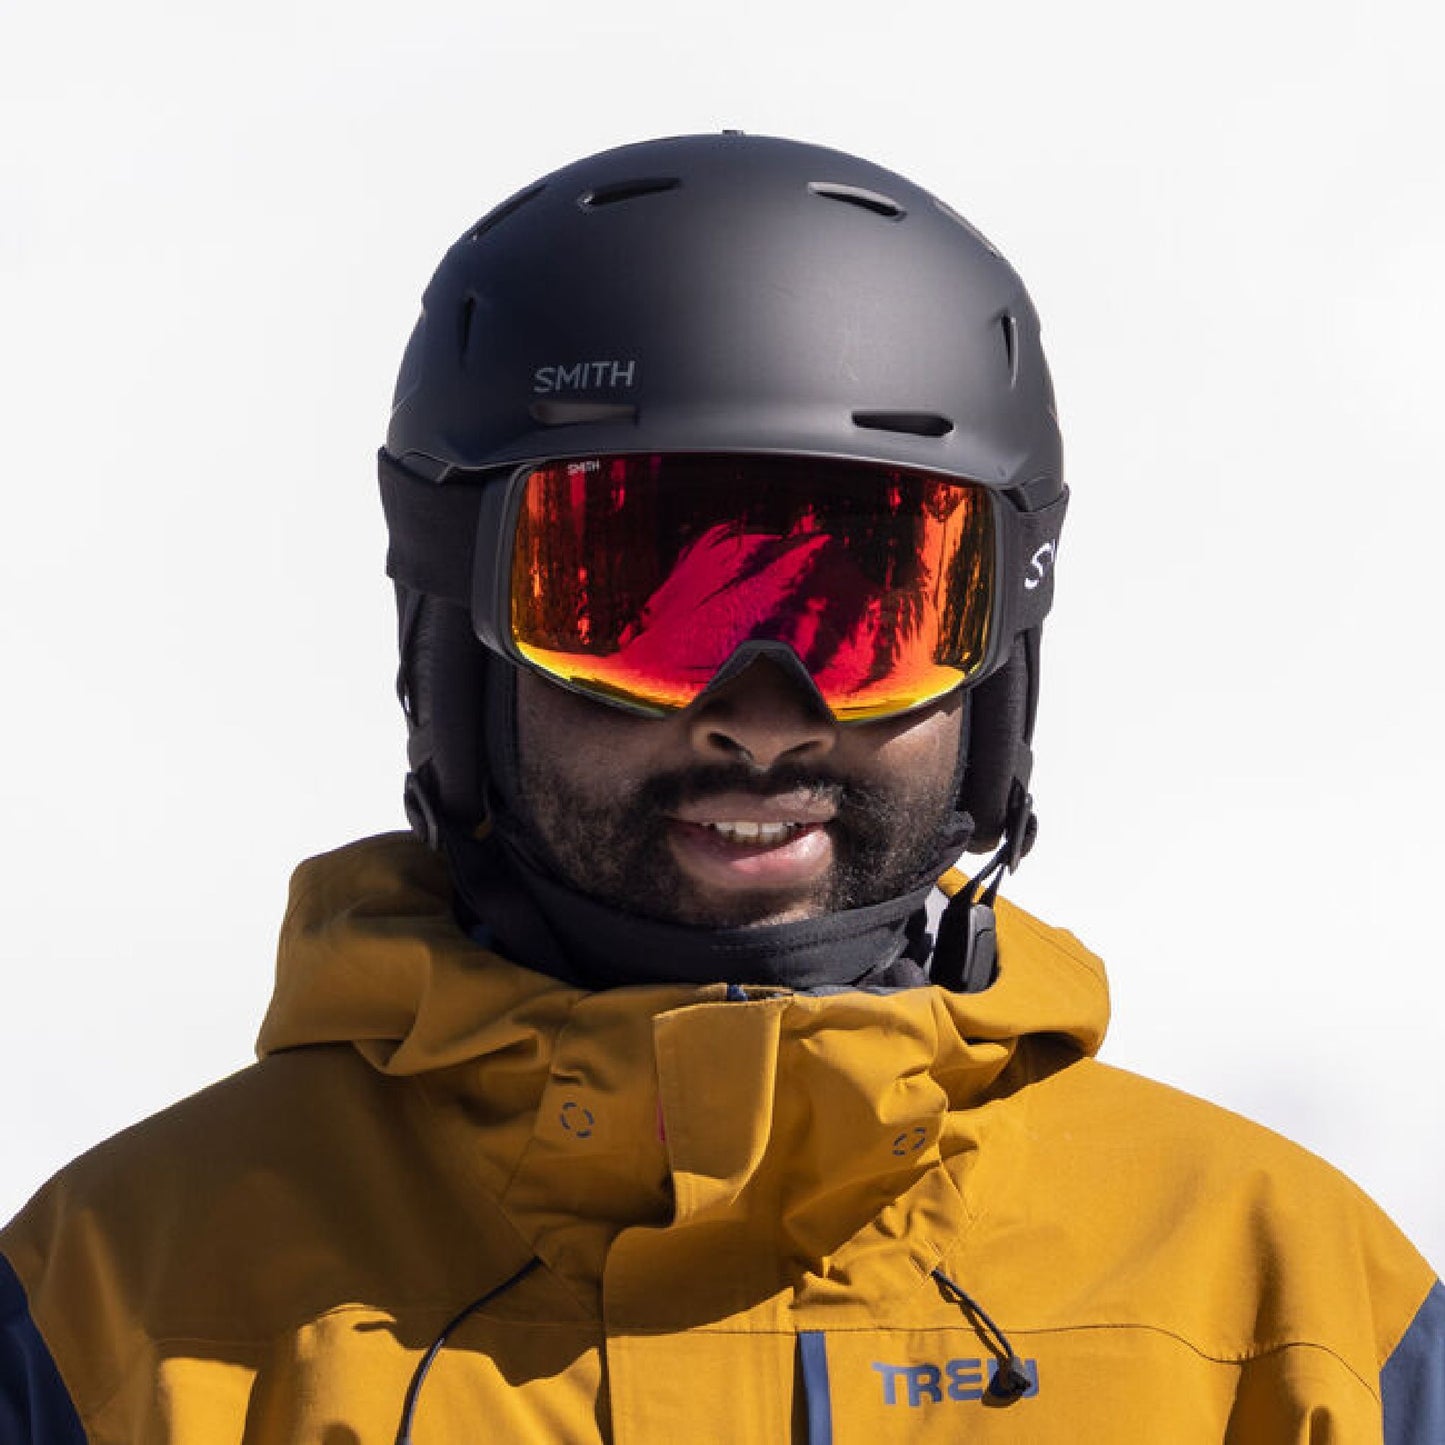 Smith Nexus MIPS Round Contour Fit Snow Helmet Matte Black Snow Helmets